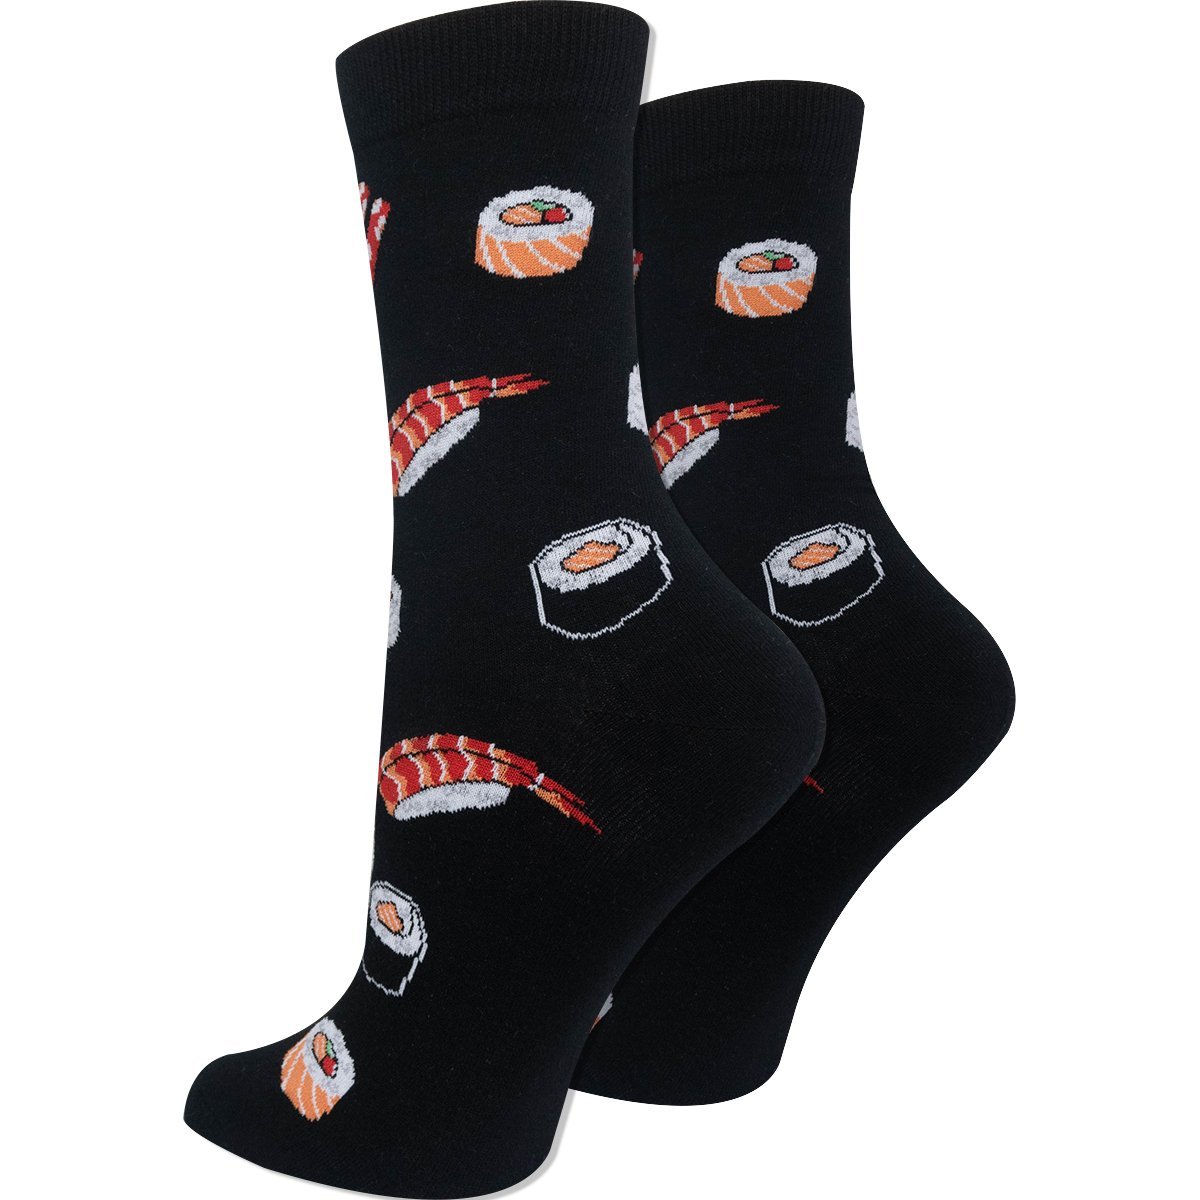 Sushi Socks - Imagery Socks